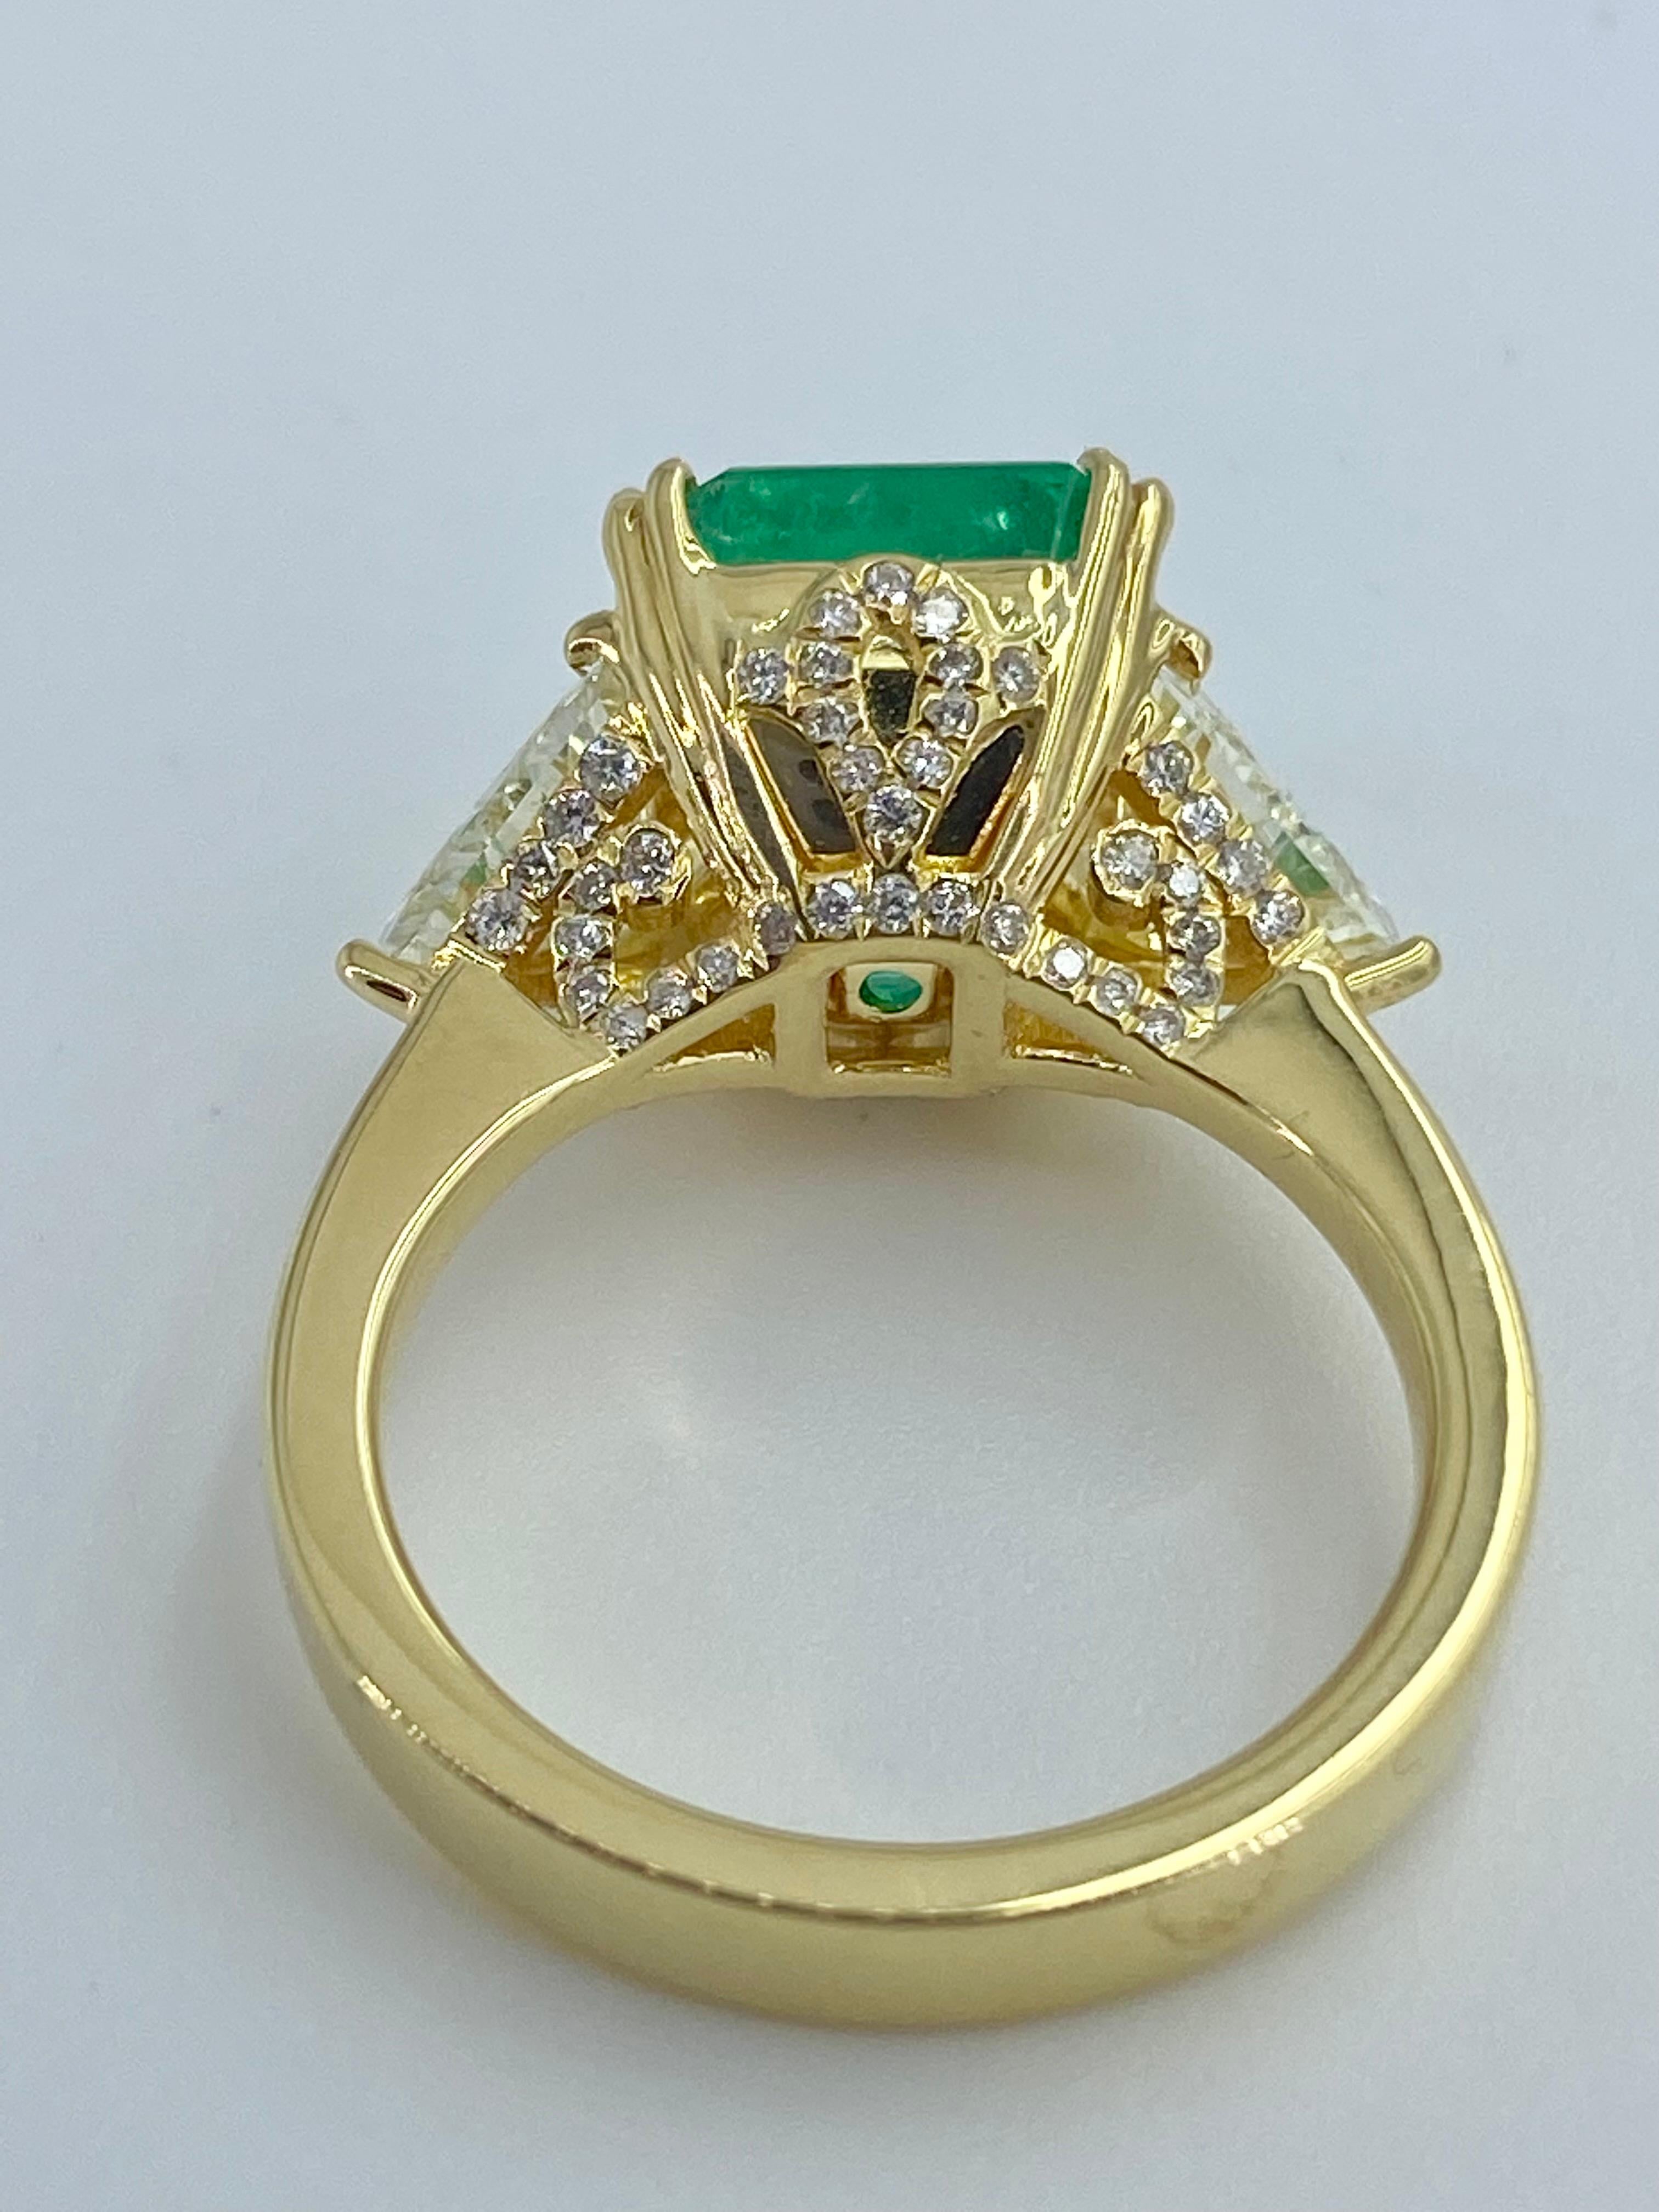 Emerald Cut 5.67 Carat Emerald-Cut Colombian Emerald and 1.15 Carat Diamond Engagement Ring